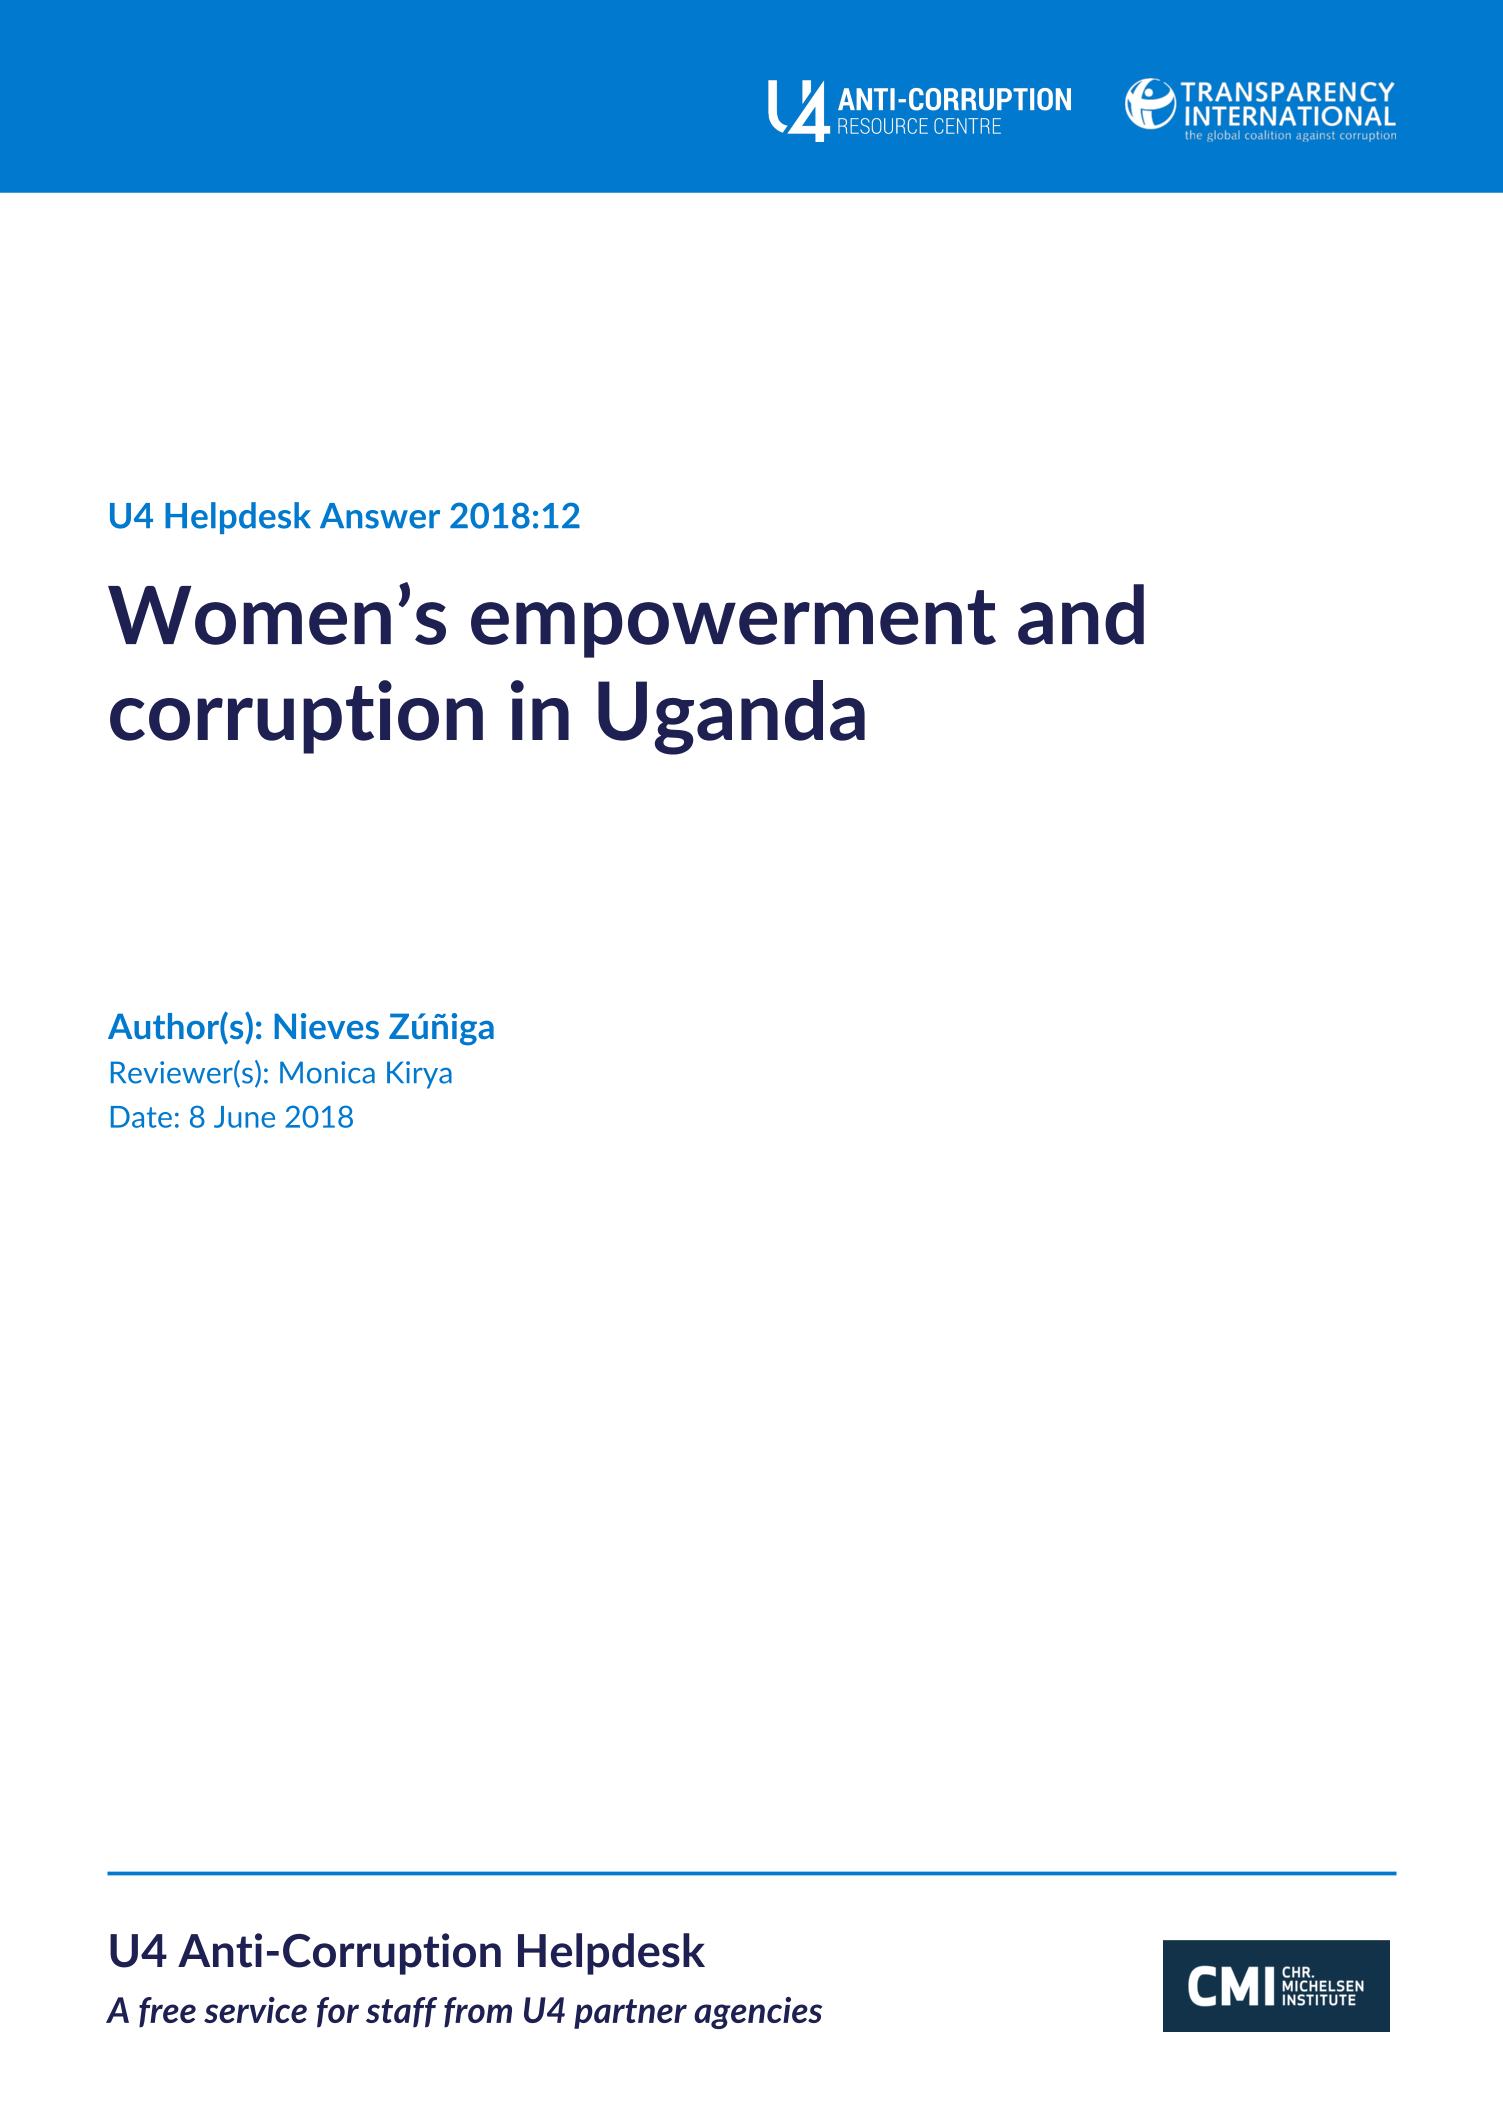 Women’s empowerment and corruption in Uganda